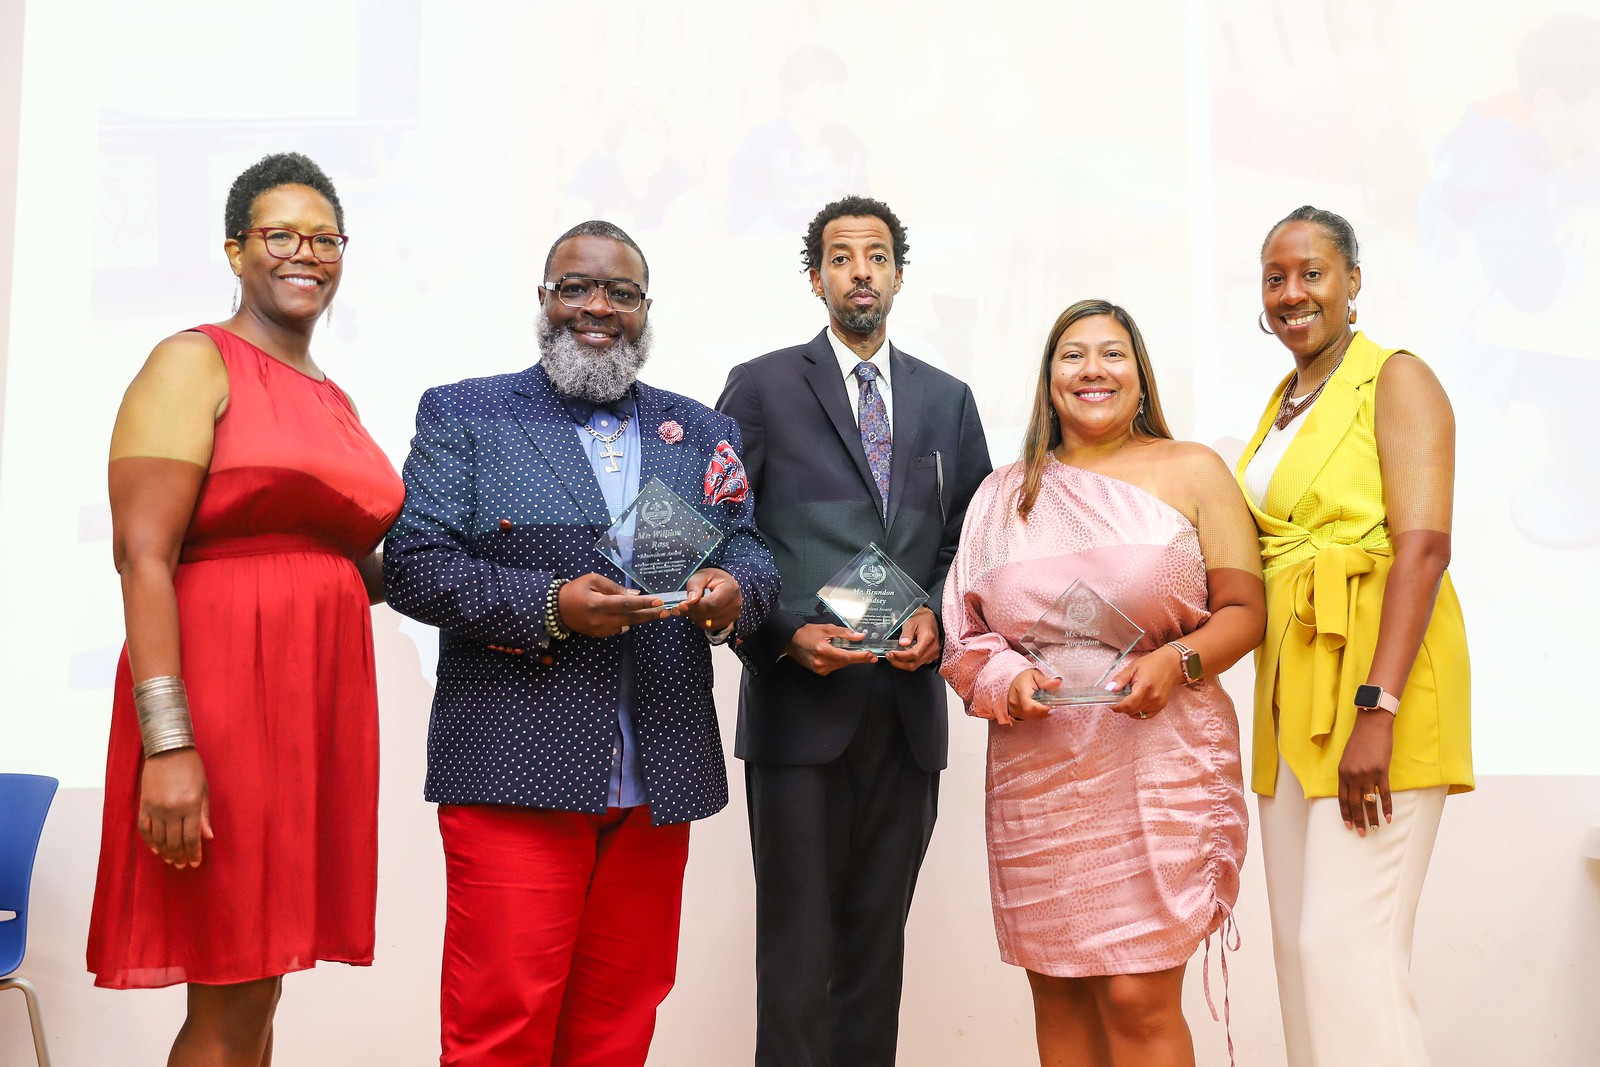 Mediation Center Youth Programs Recognition & Awards Celebration